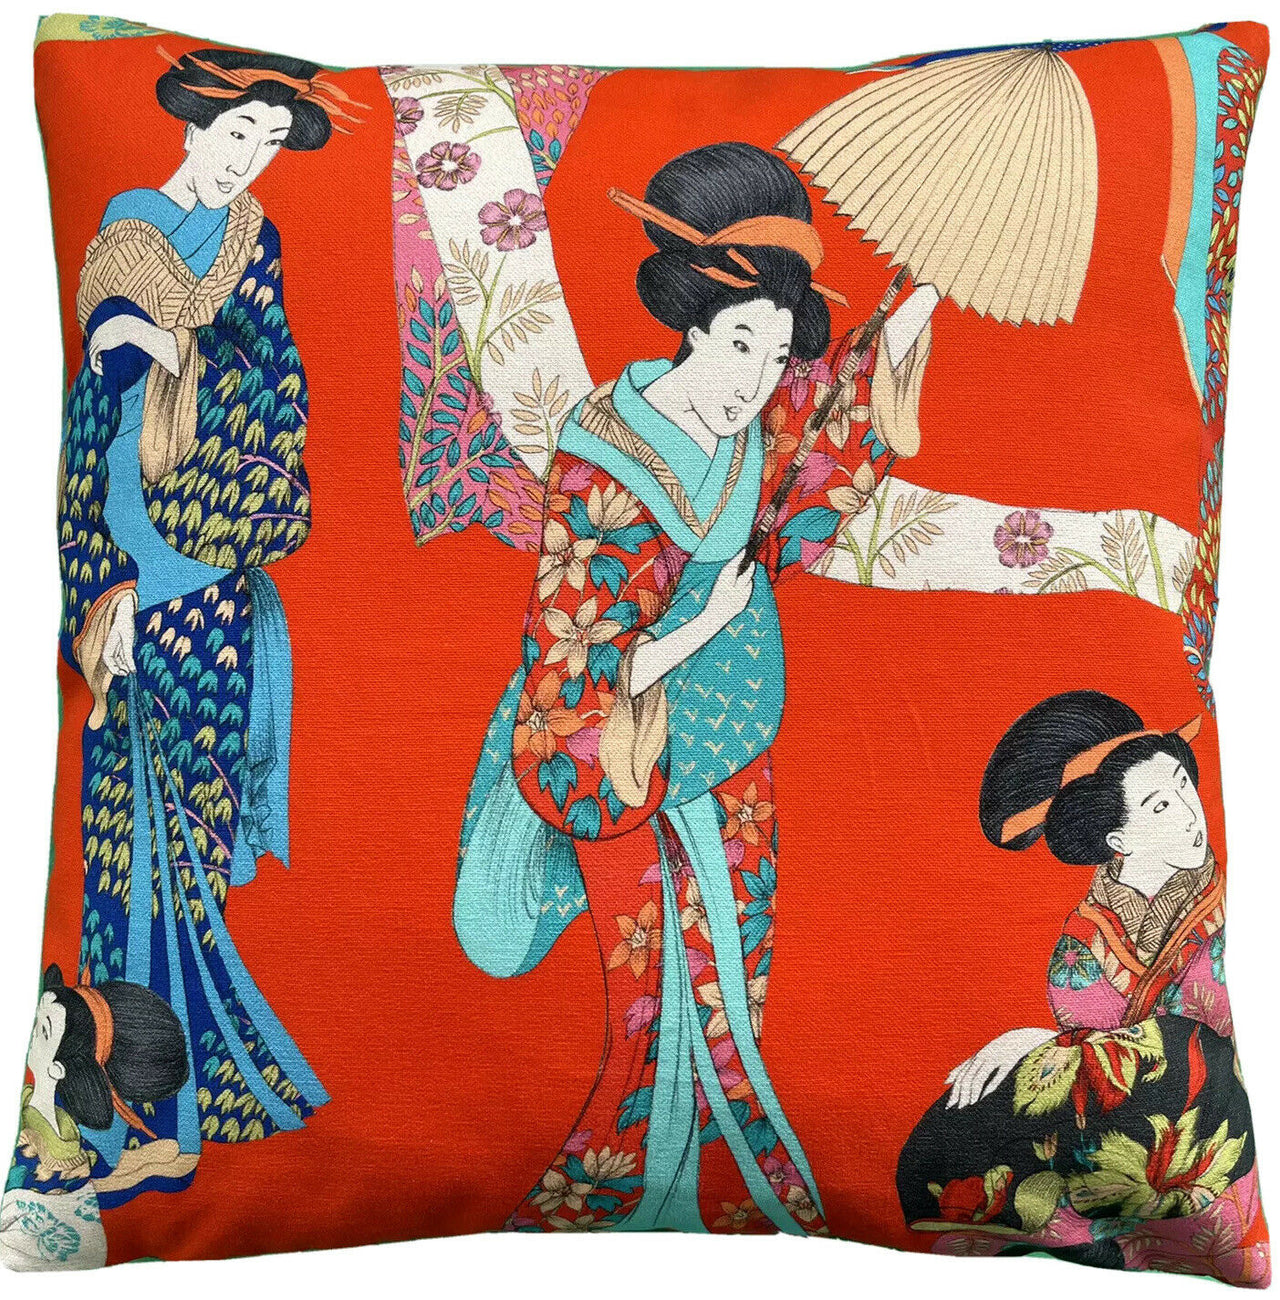 Red Throw Pillow Cover Geisha Kimono Cushion Cover Japanese Lady Oriental Pillowcase